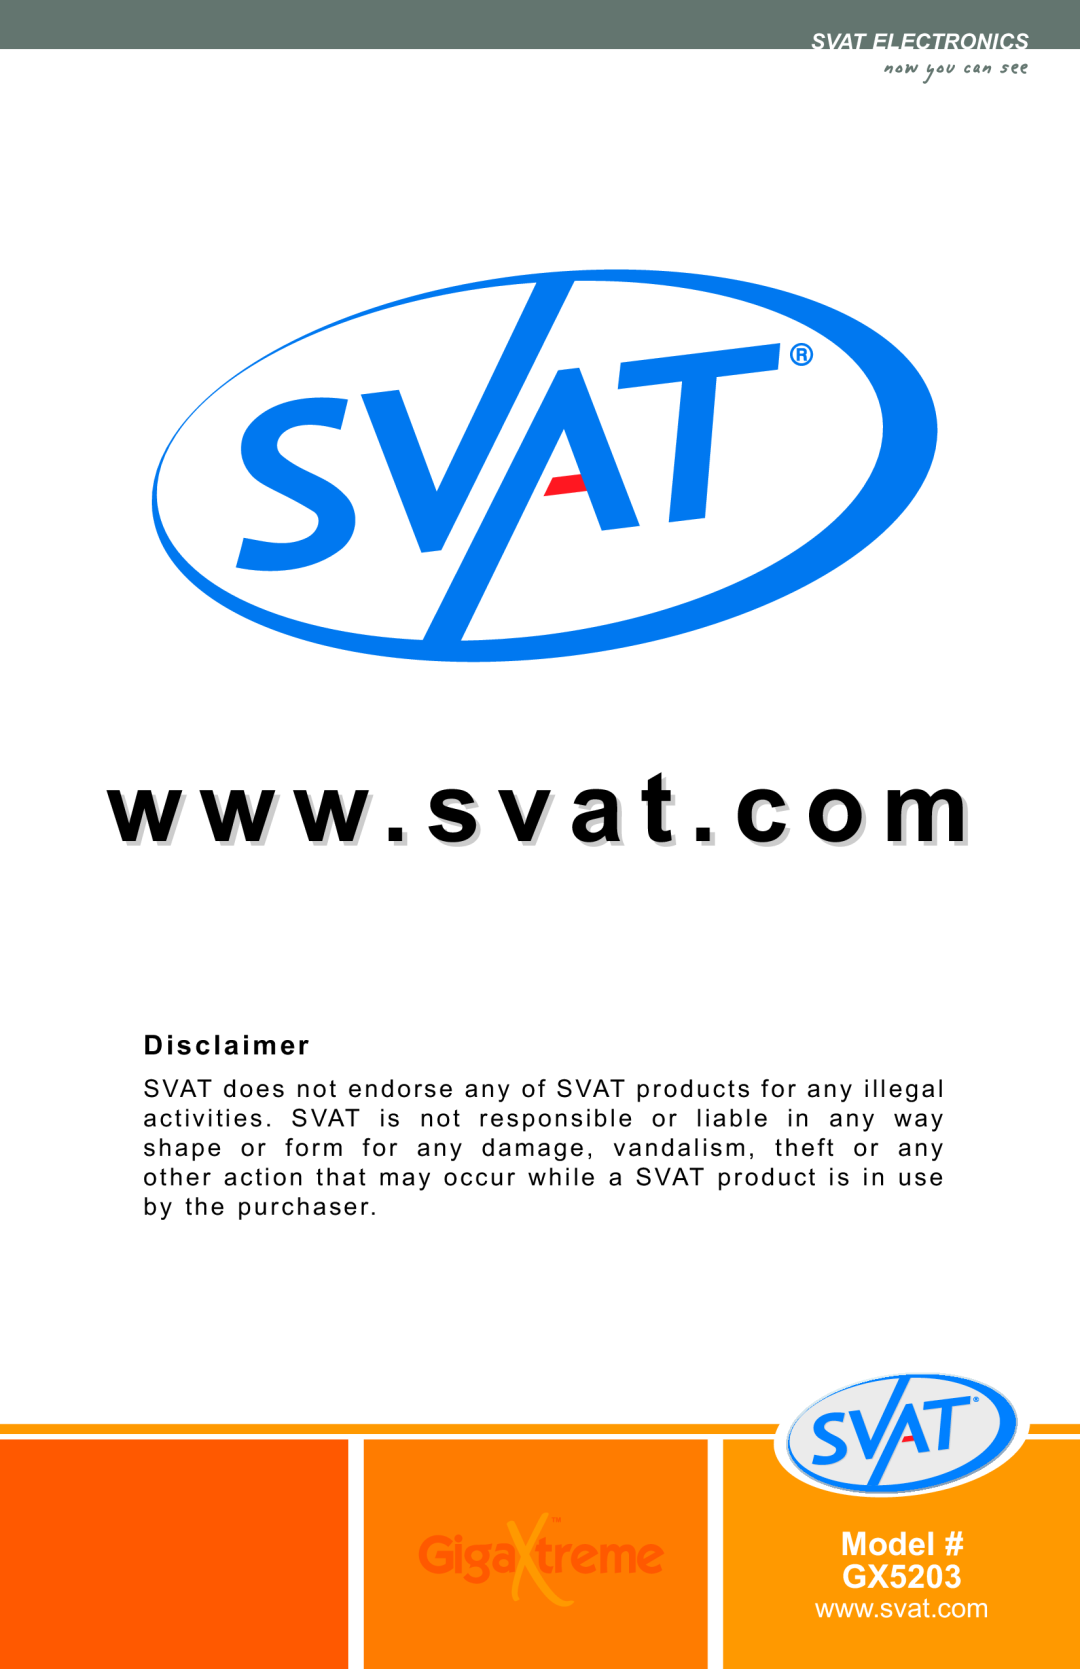 SVAT Electronics w w w. s v a t . c o m, now you can see, Model # GX5203, Disclaimer, Svat Electronics 